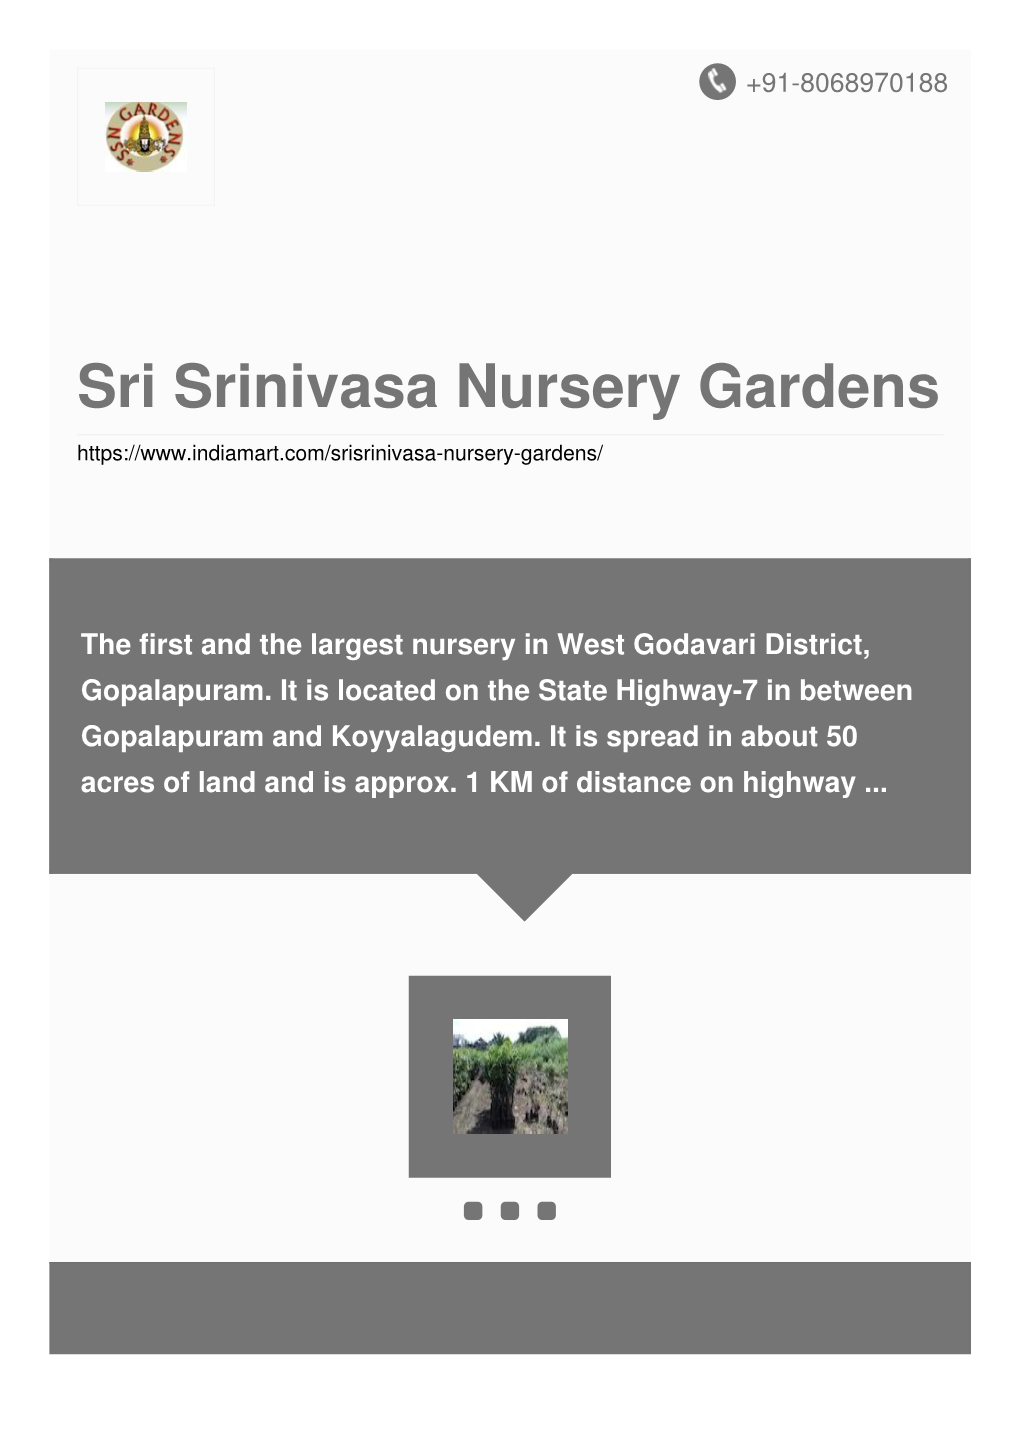 Sri Srinivasa Nursery Gardens